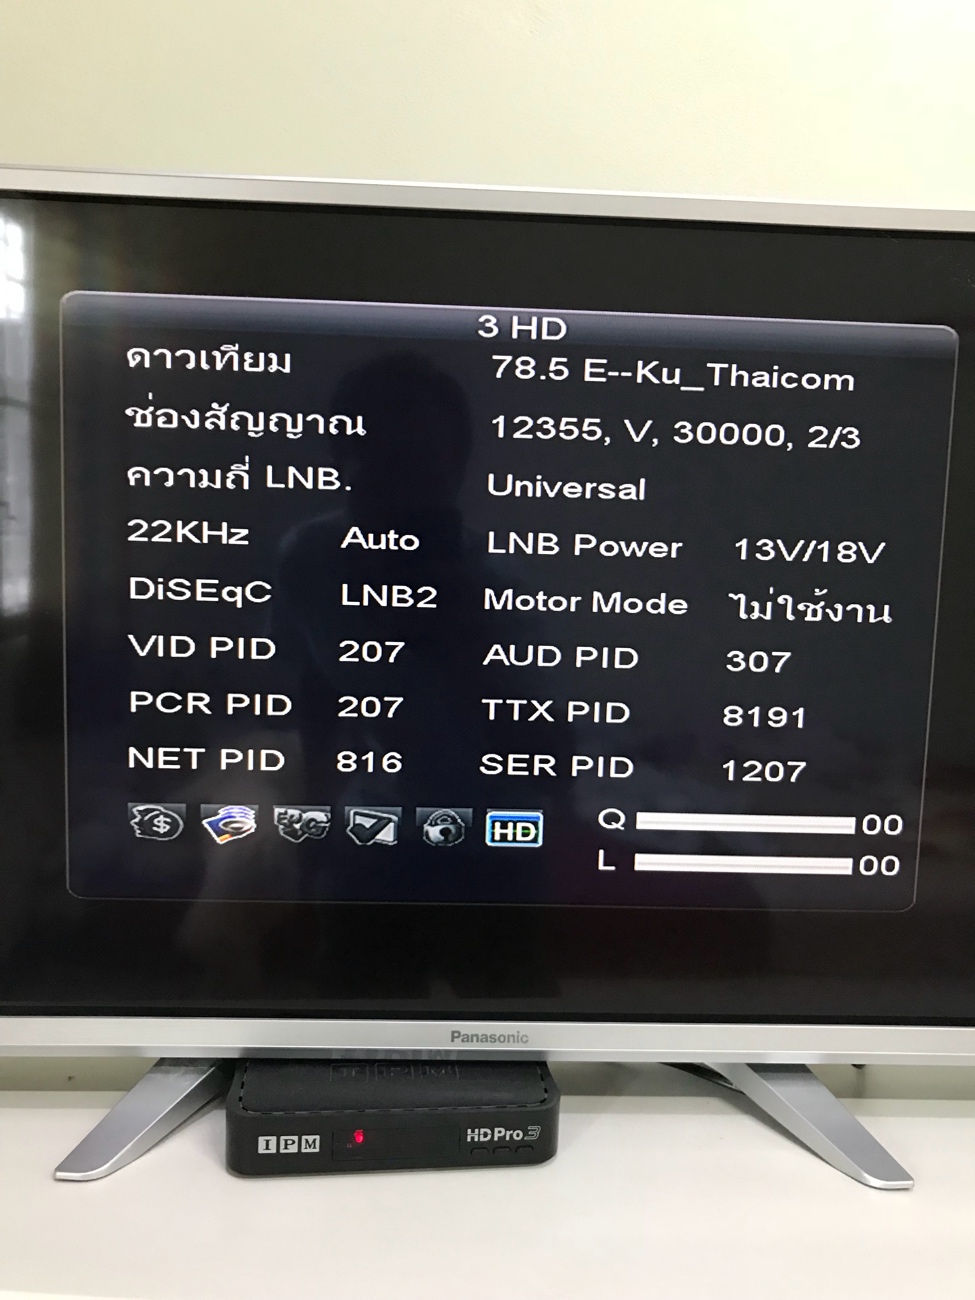 IPM HD Pro3 ขึ้นเดือนธันวาคม แล้วดูช่อง 33 ไม่ได้ - Pantip